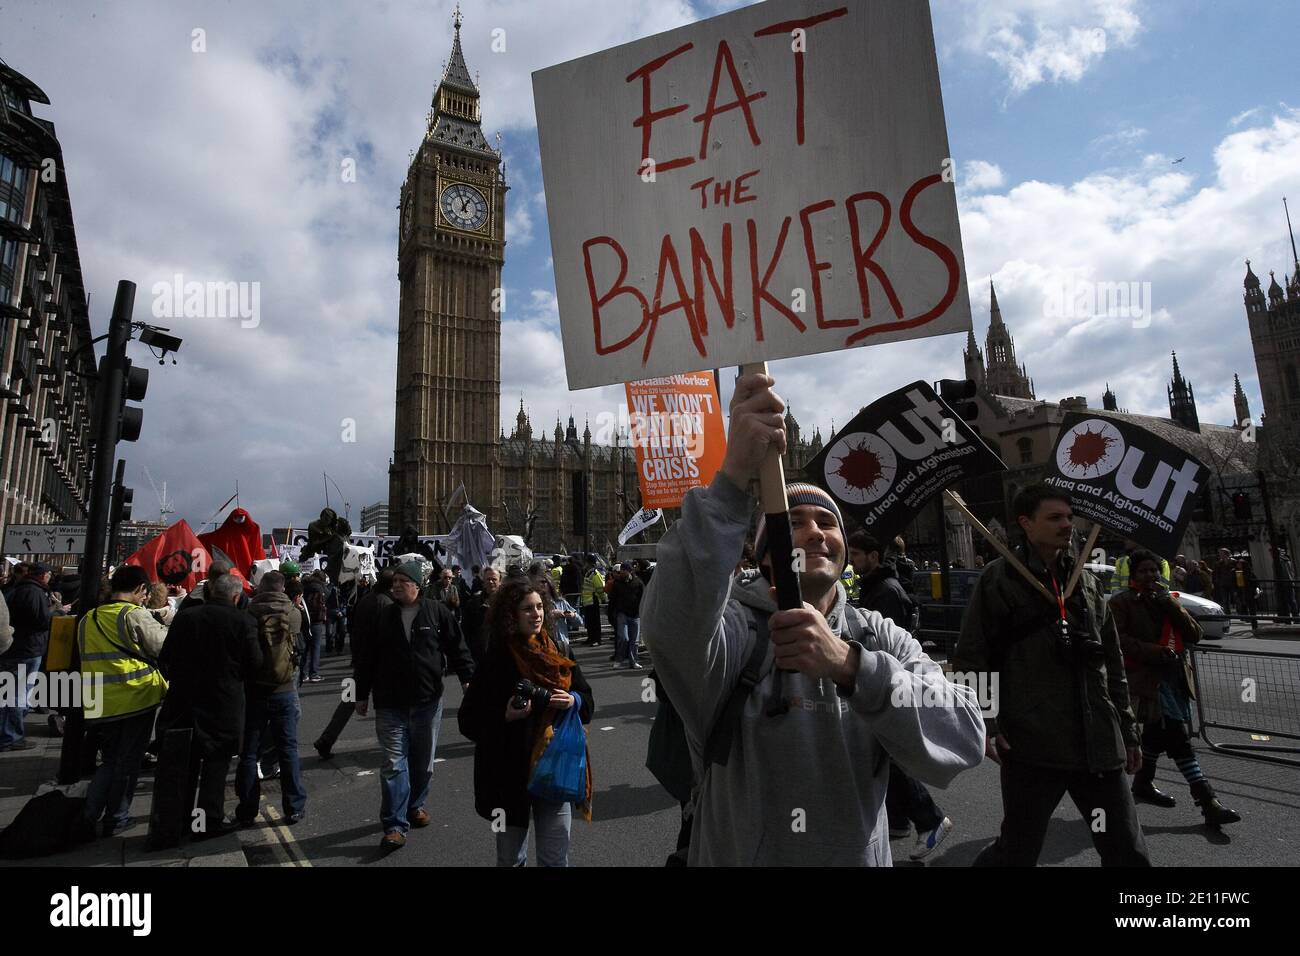 GROSSBRITANNIEN / England / London / Ein Protestler singt am 28. März 2009 in London, England, "Eat the Bankers". Stockfoto